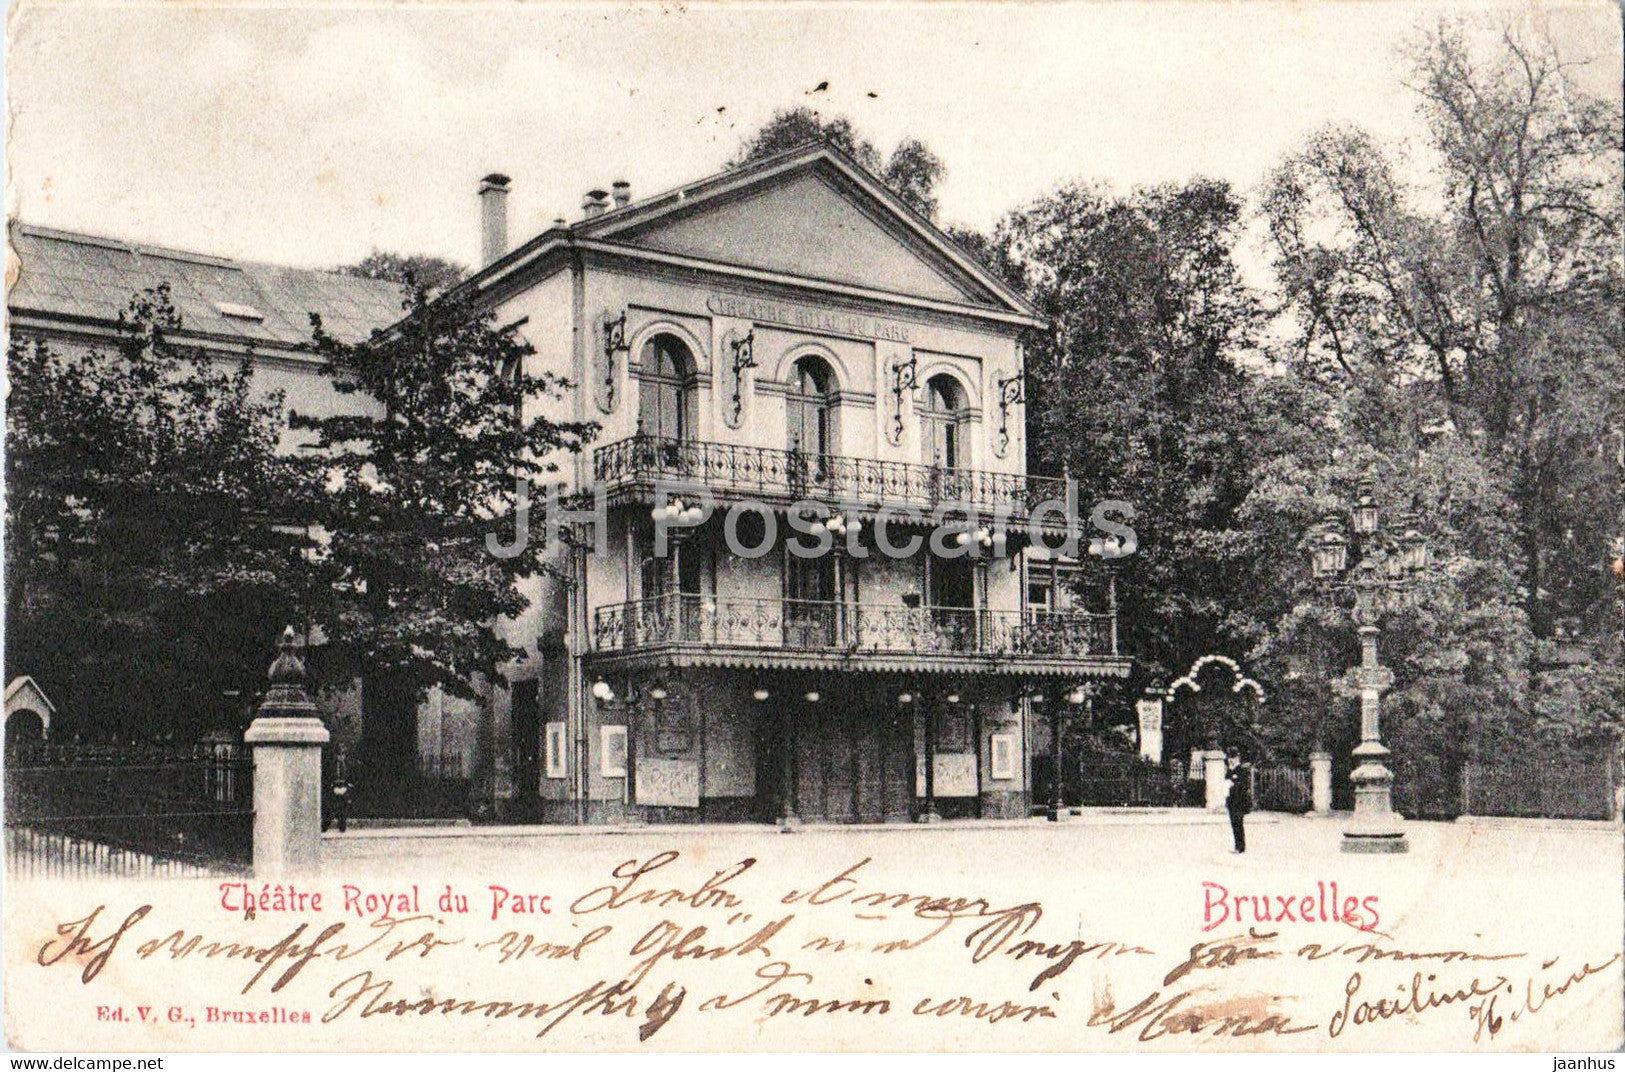 Bruxelles - Brussels - Theatre Royal du Parc - old postcard - 1902 - Belgium - used - JH Postcards